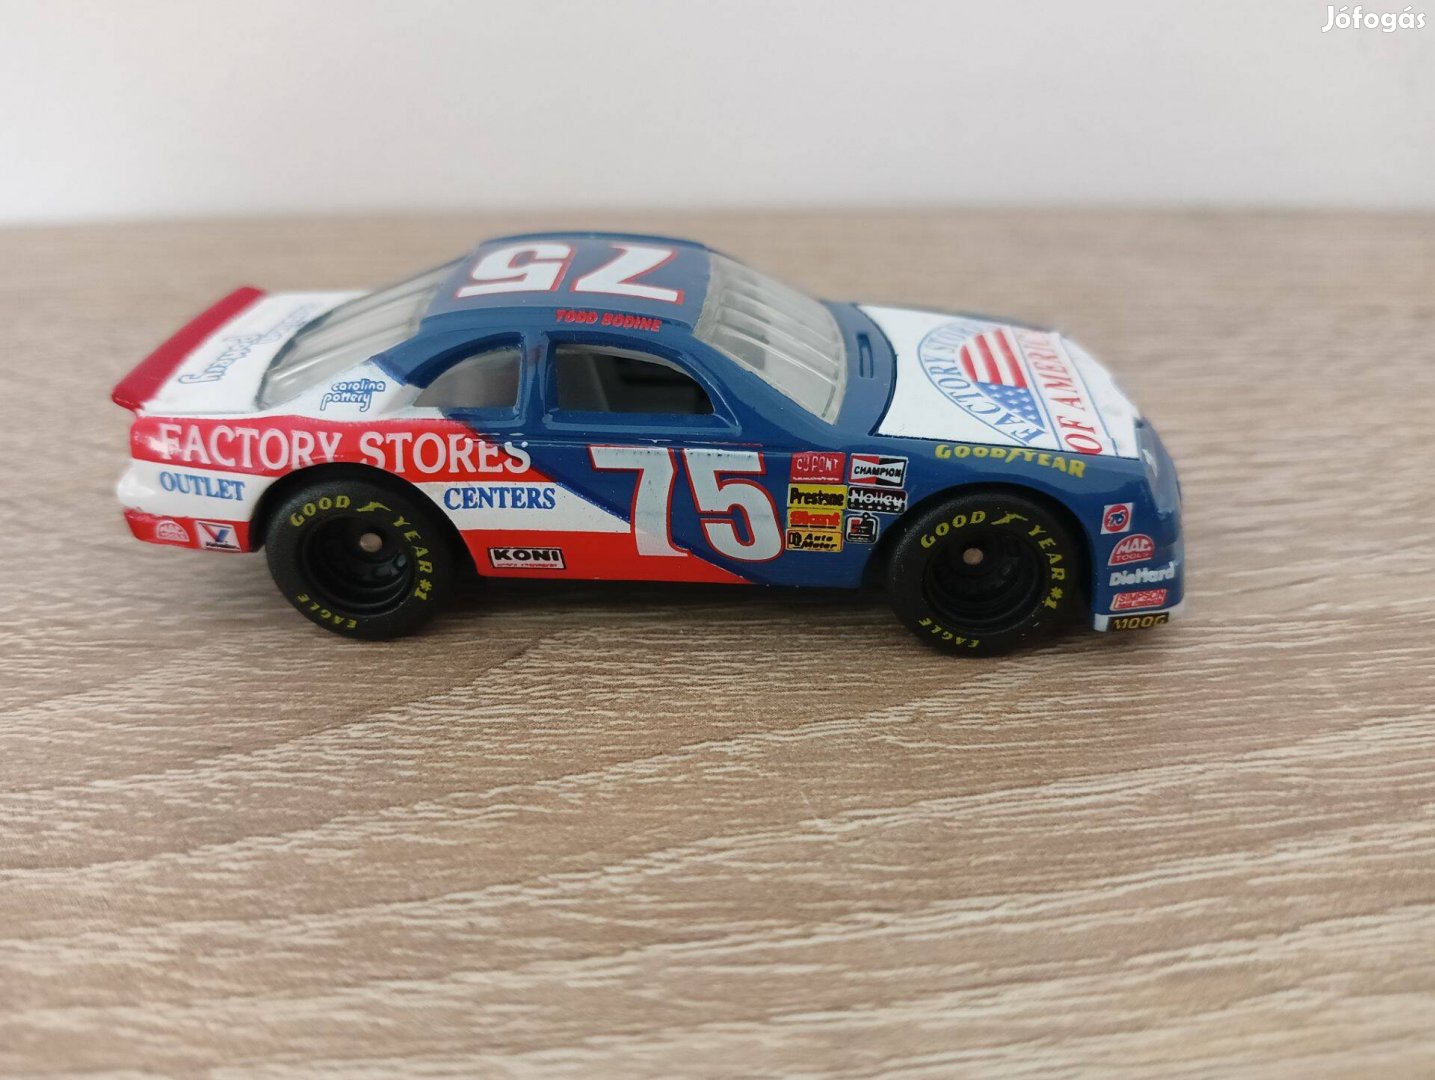 1994 Series II Super Stars Matchbox Factory üzletek Of America Racing